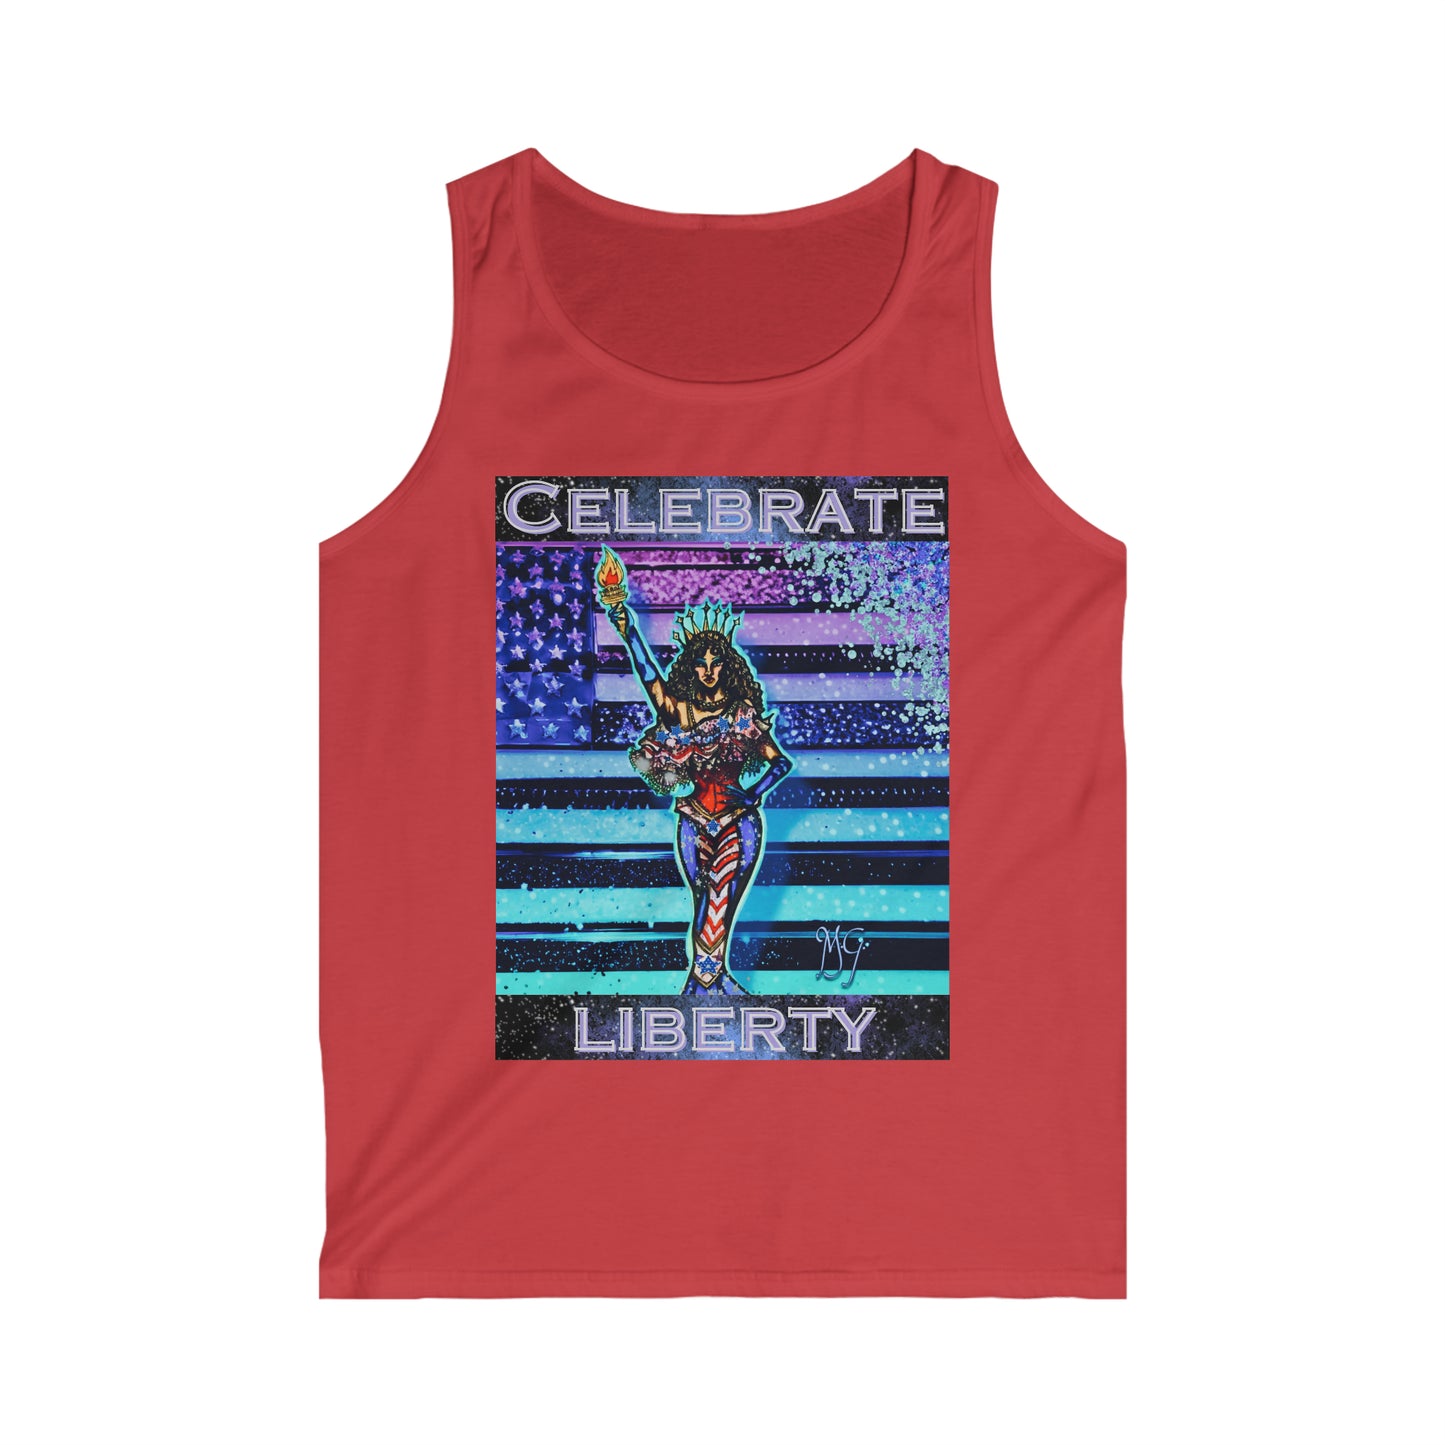 Celebrate Liberty with Lady Liberty Softstyle Tank Top